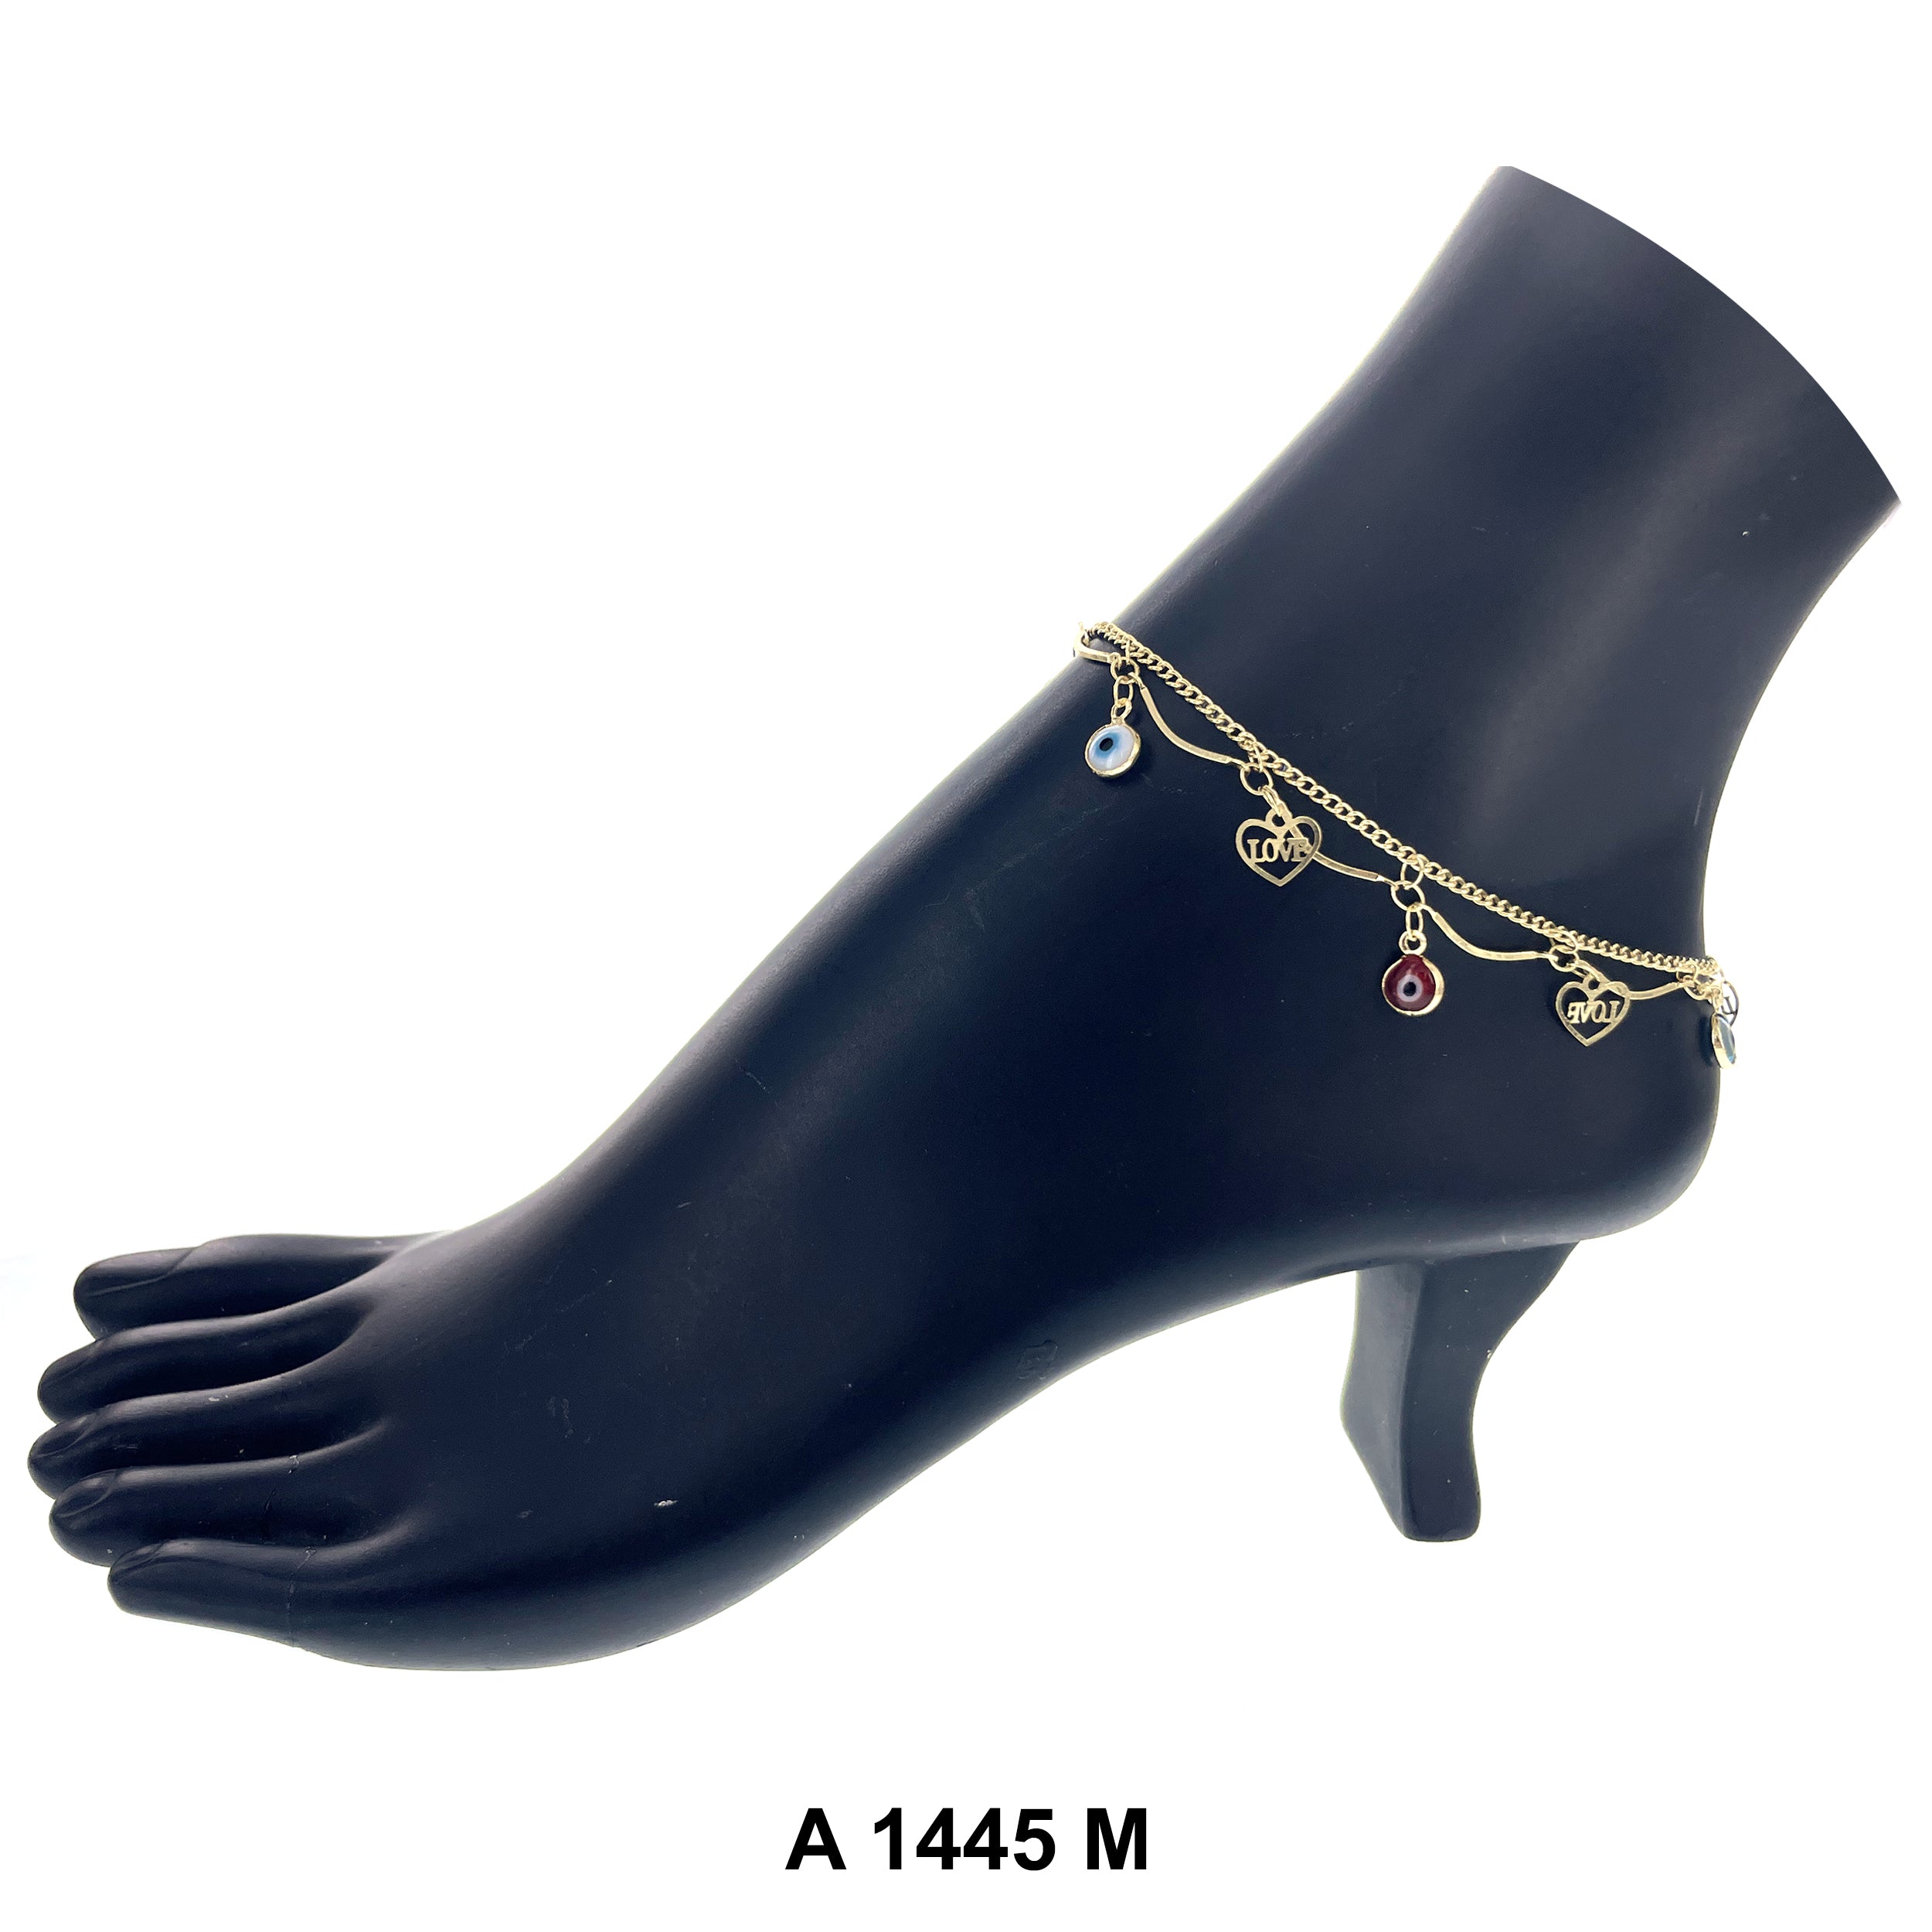 Fashion Anklets A 1445 M